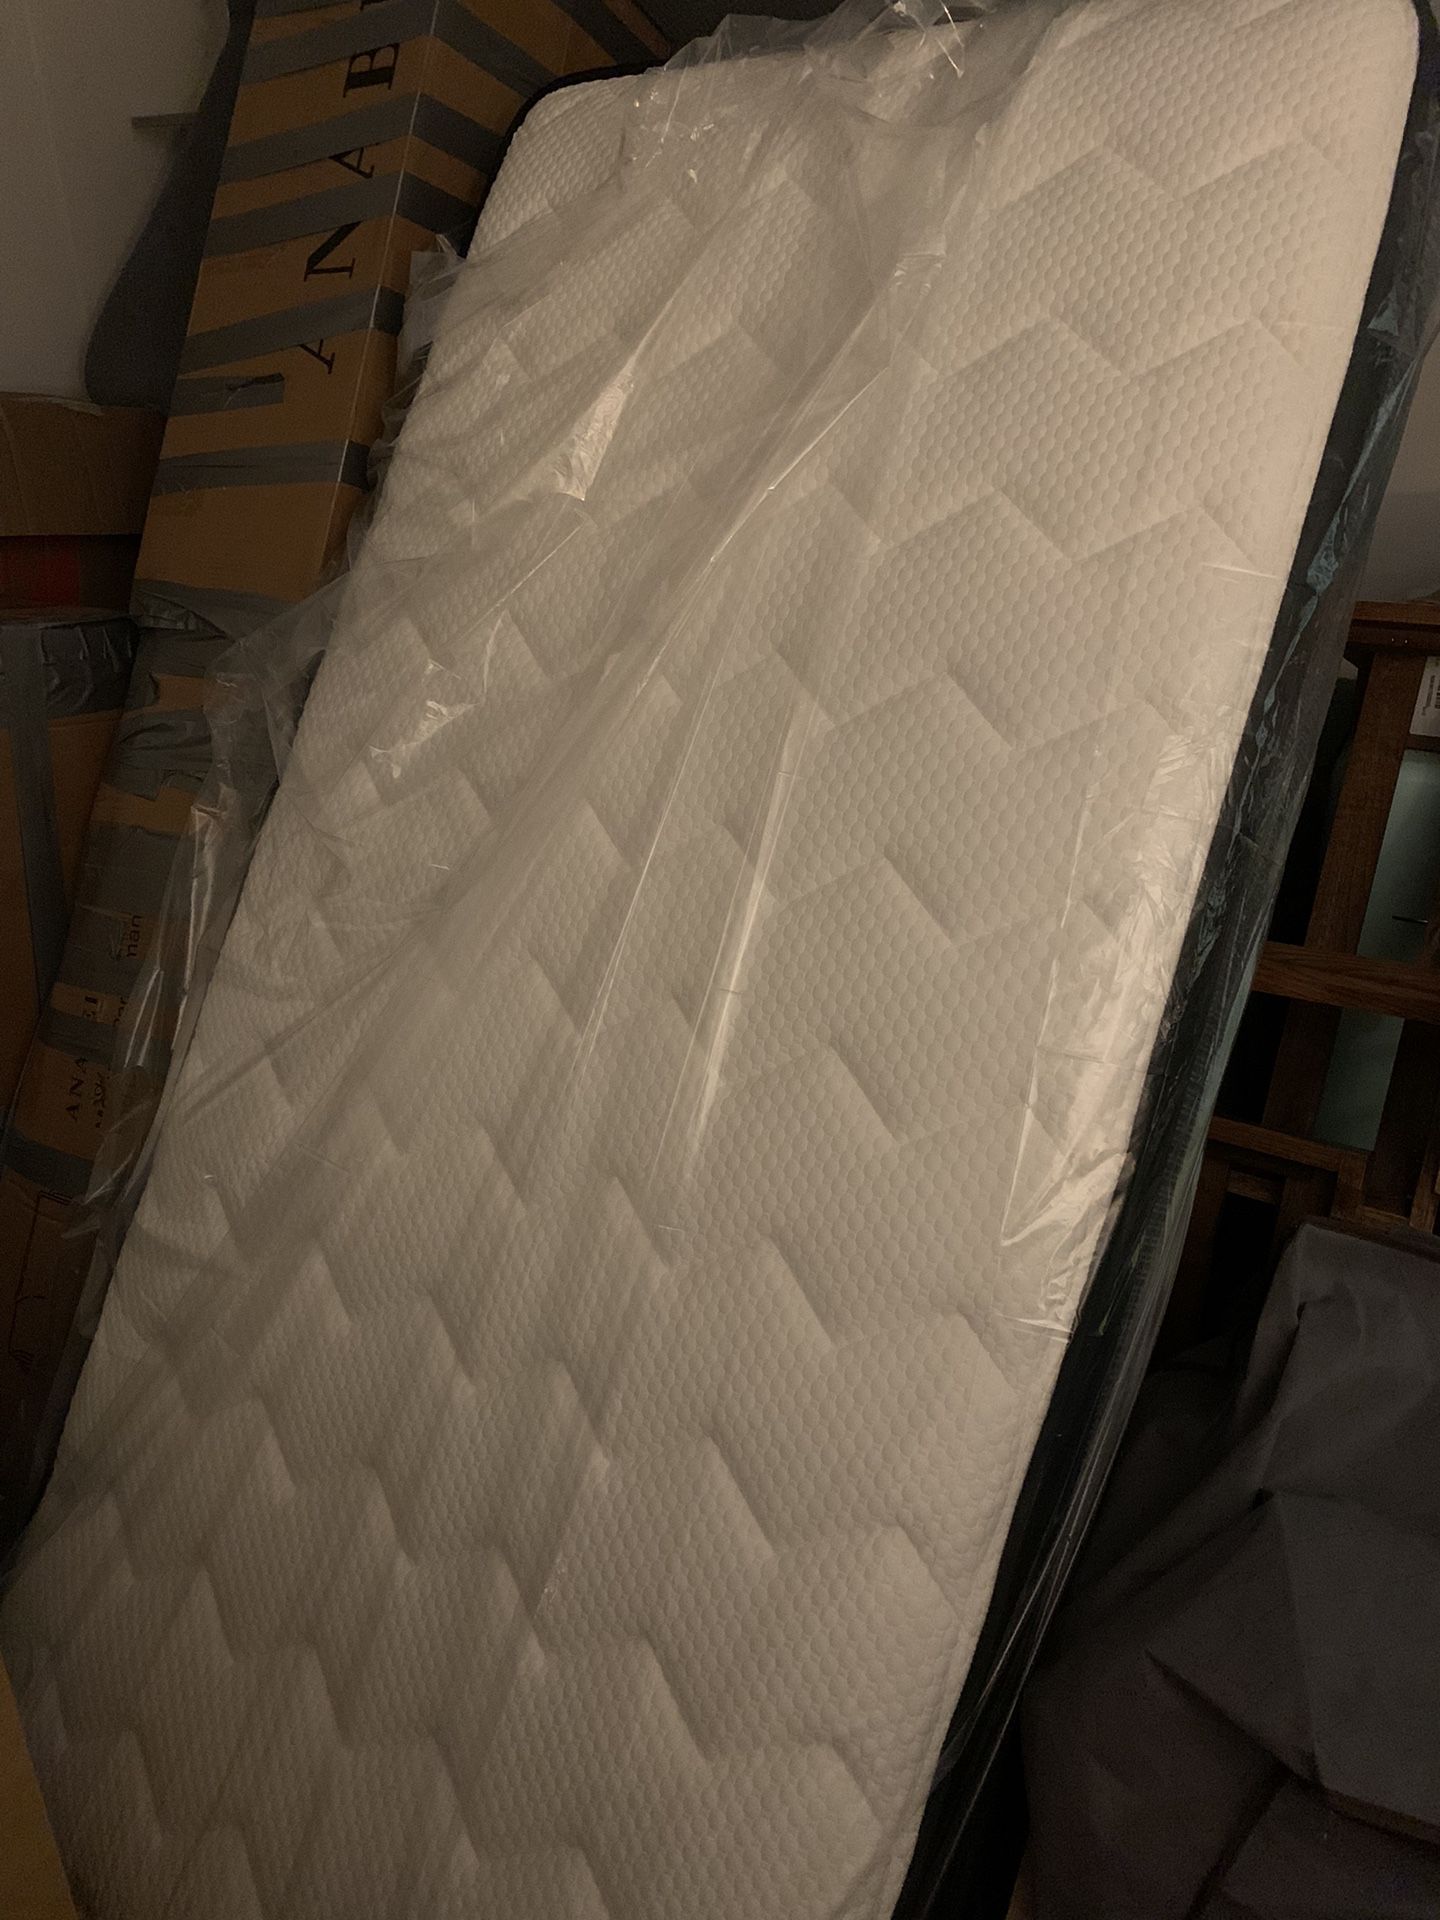 Twin Mattress (Purchased mattress from Mancini’s Sleepworld for $310)